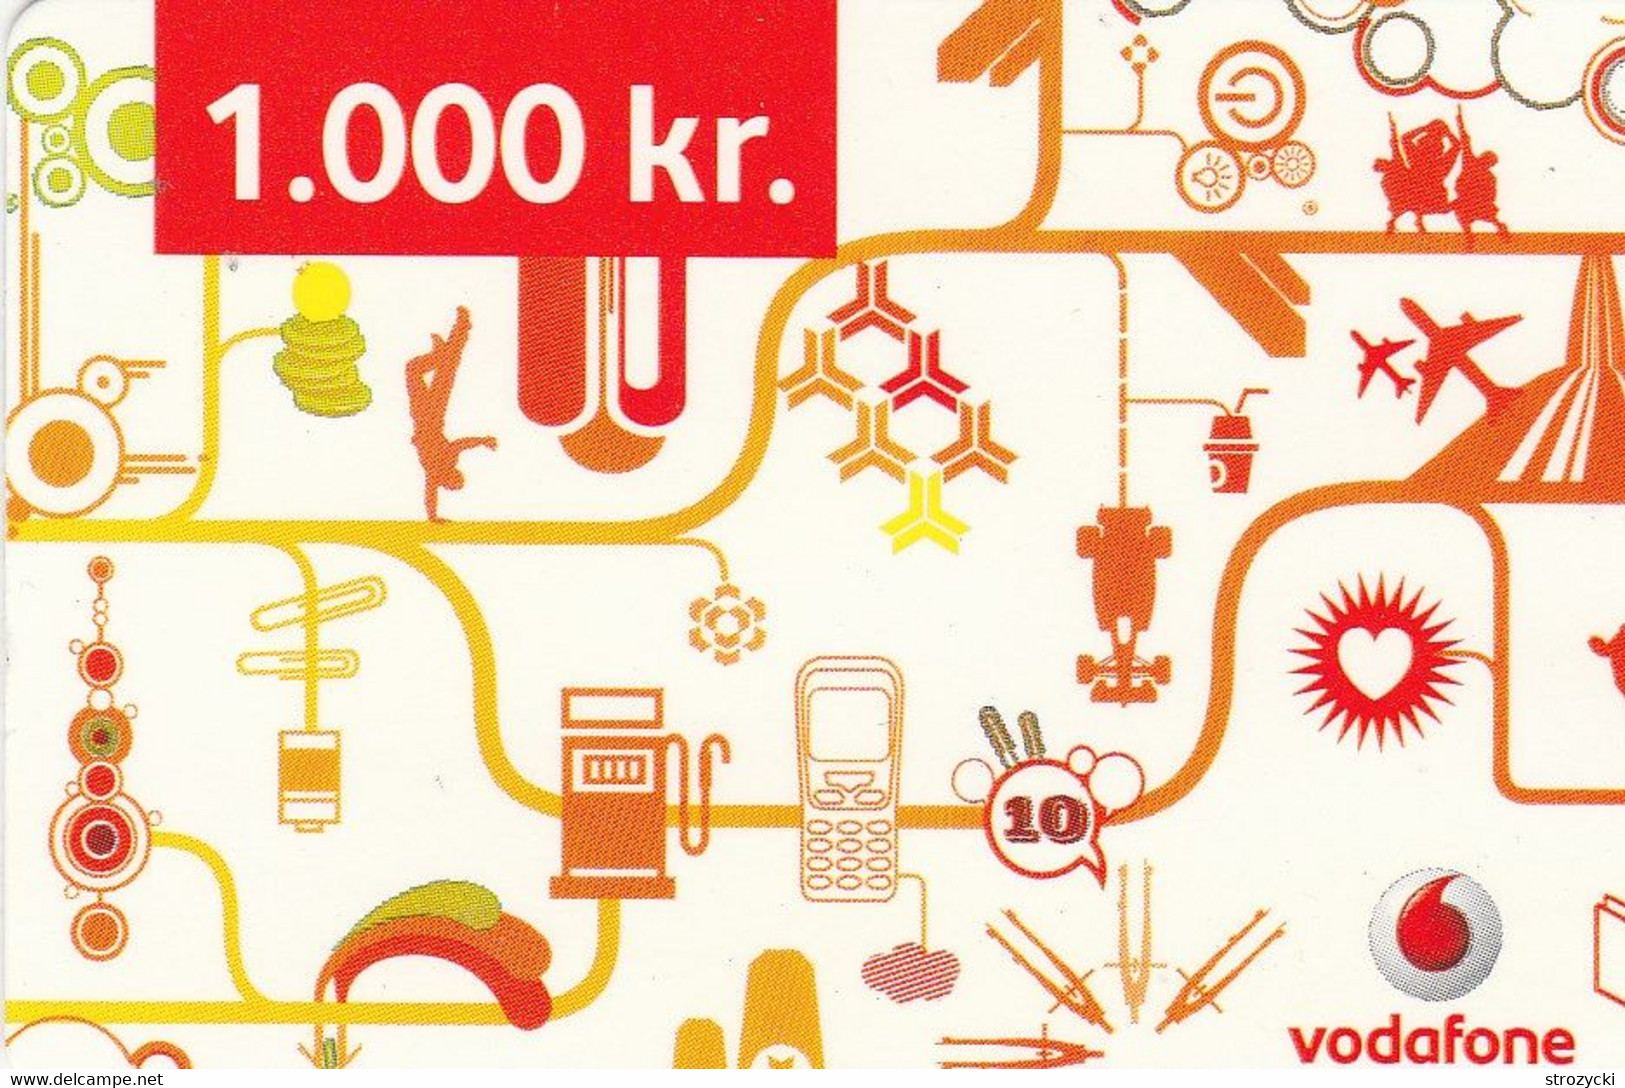 Iceland - Vodafone - 1000 Kr (20.05.2011) - Iceland